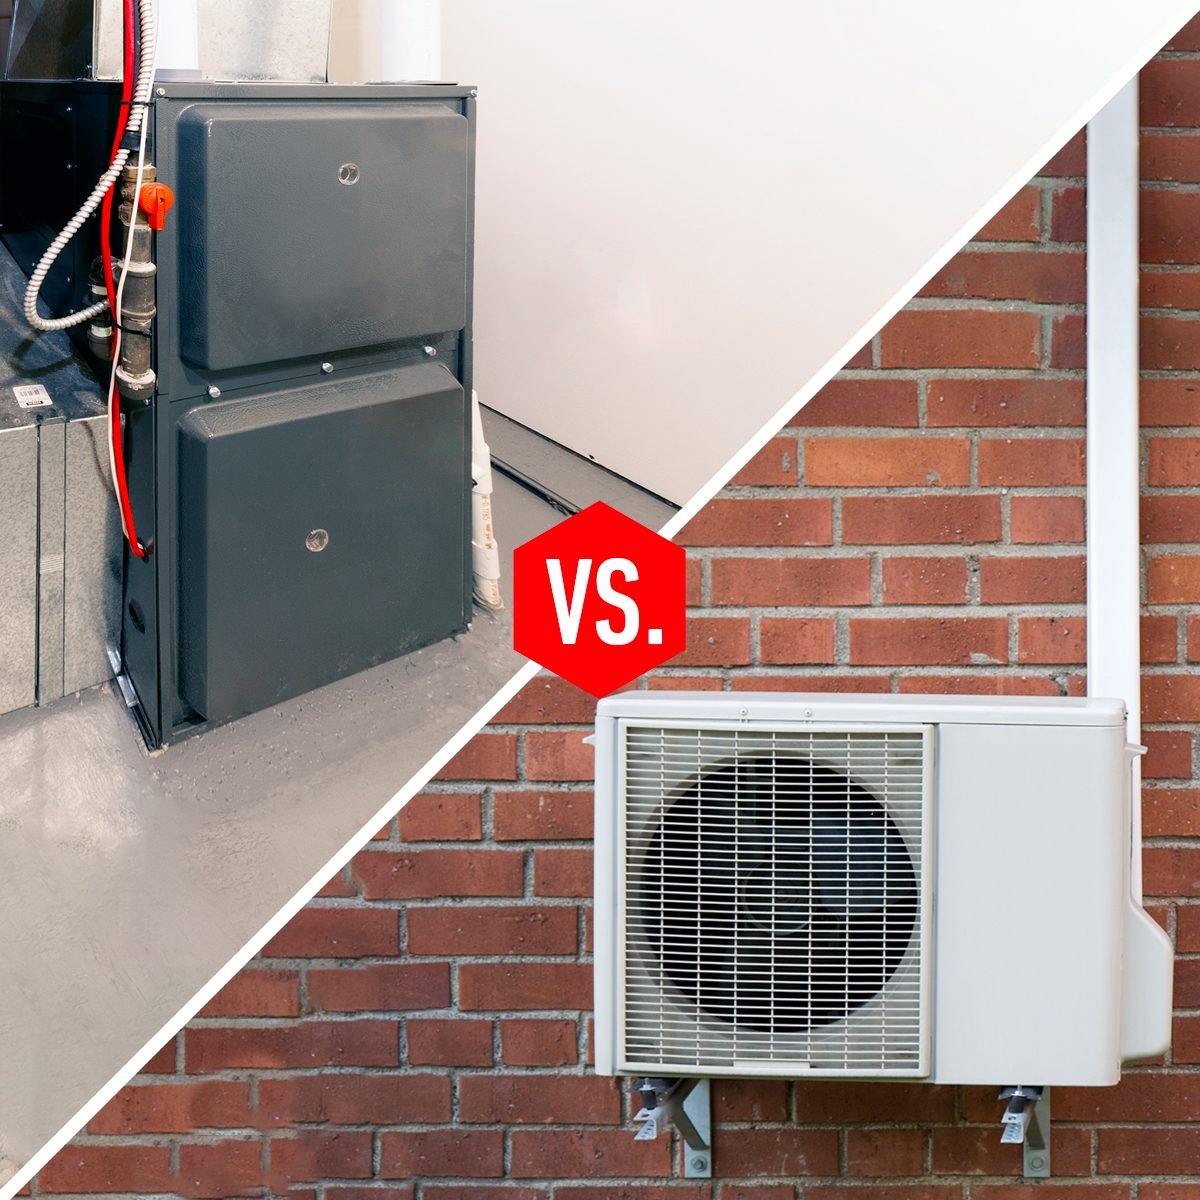 How To Choose Between a Heat Pump vs. a Furnace